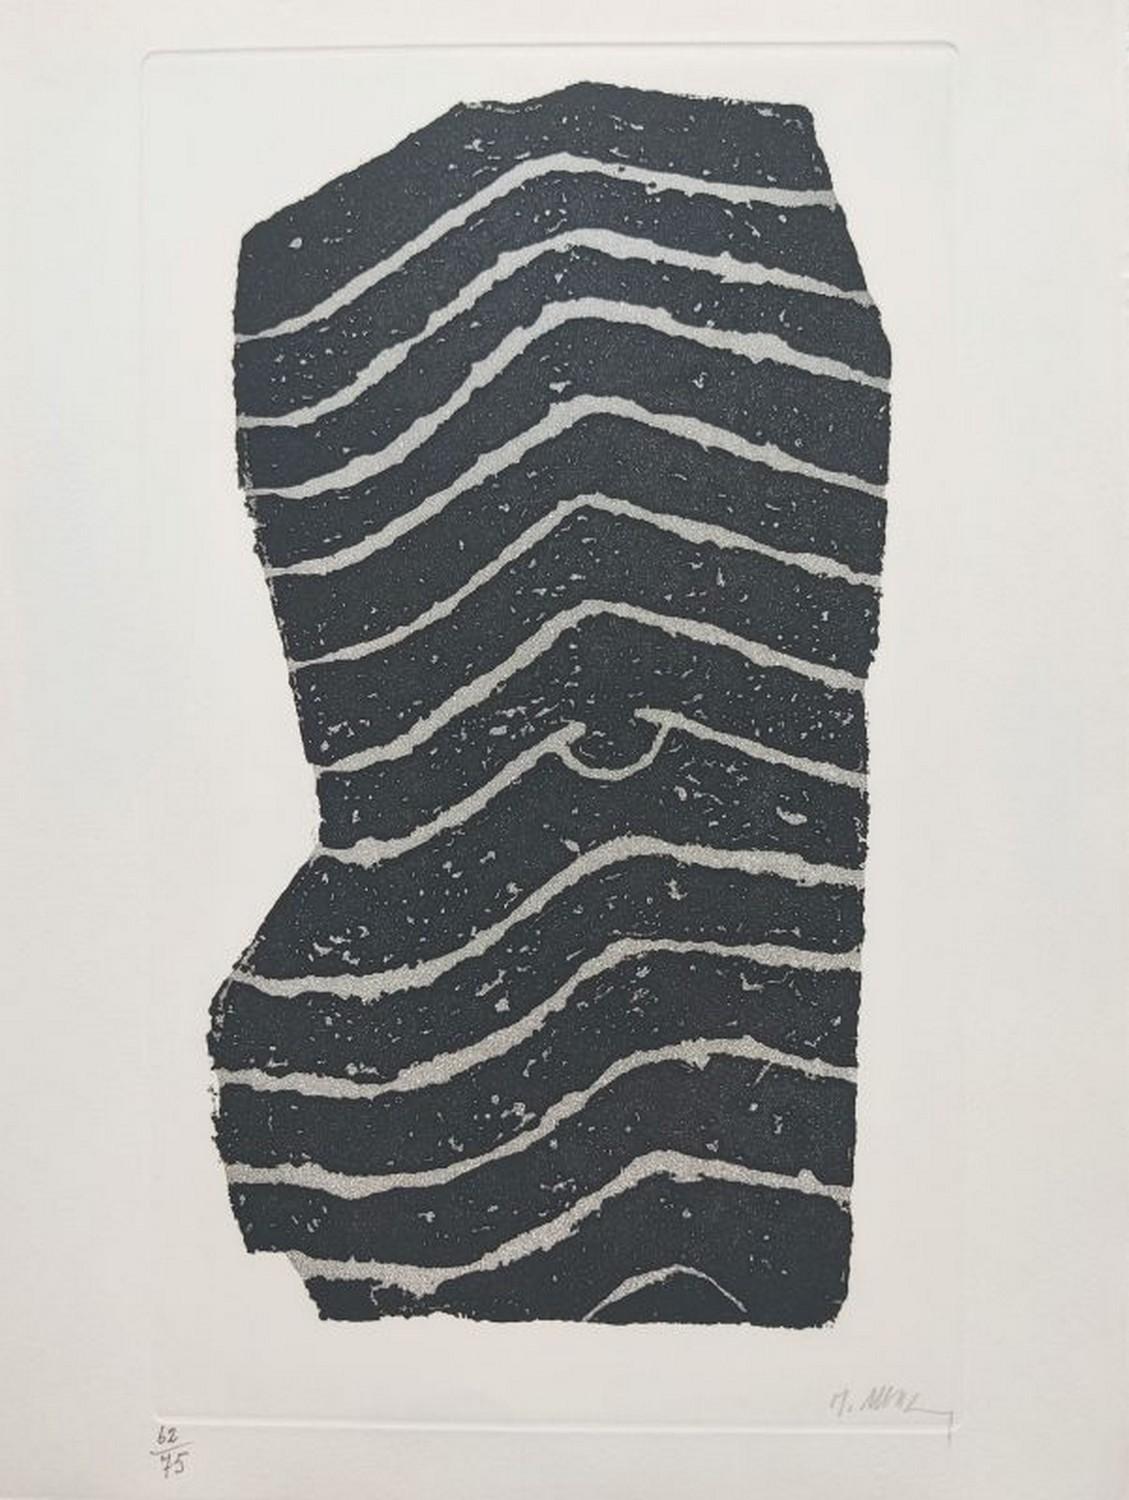 Abstract Print Raoul Ubac - Paroles Peintes 